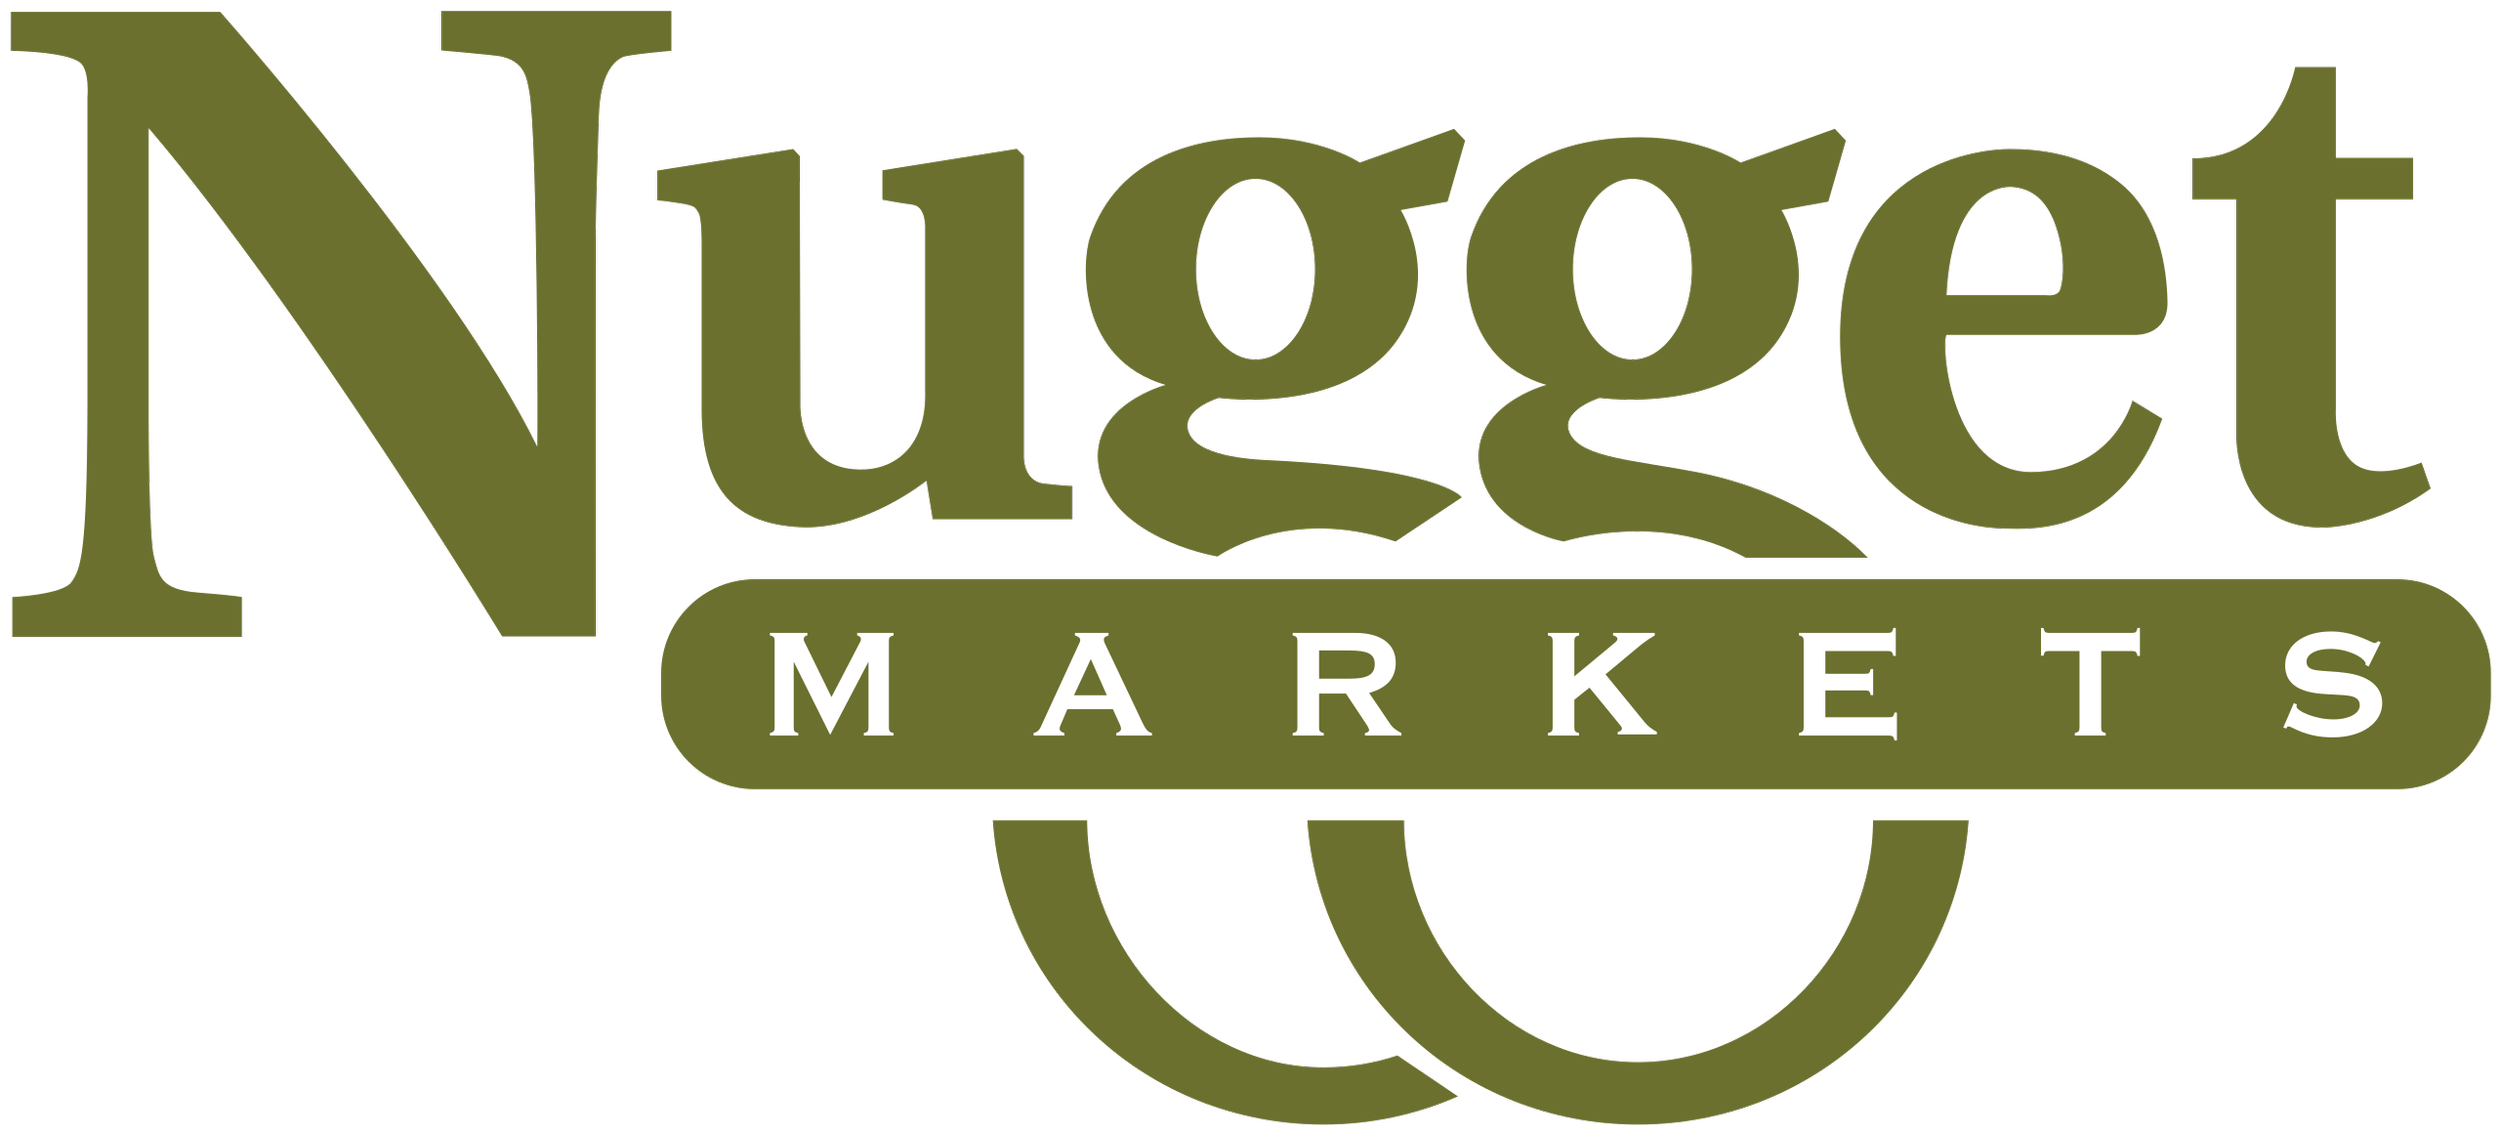 2560px-Nugget_Markets_logo.svg.png